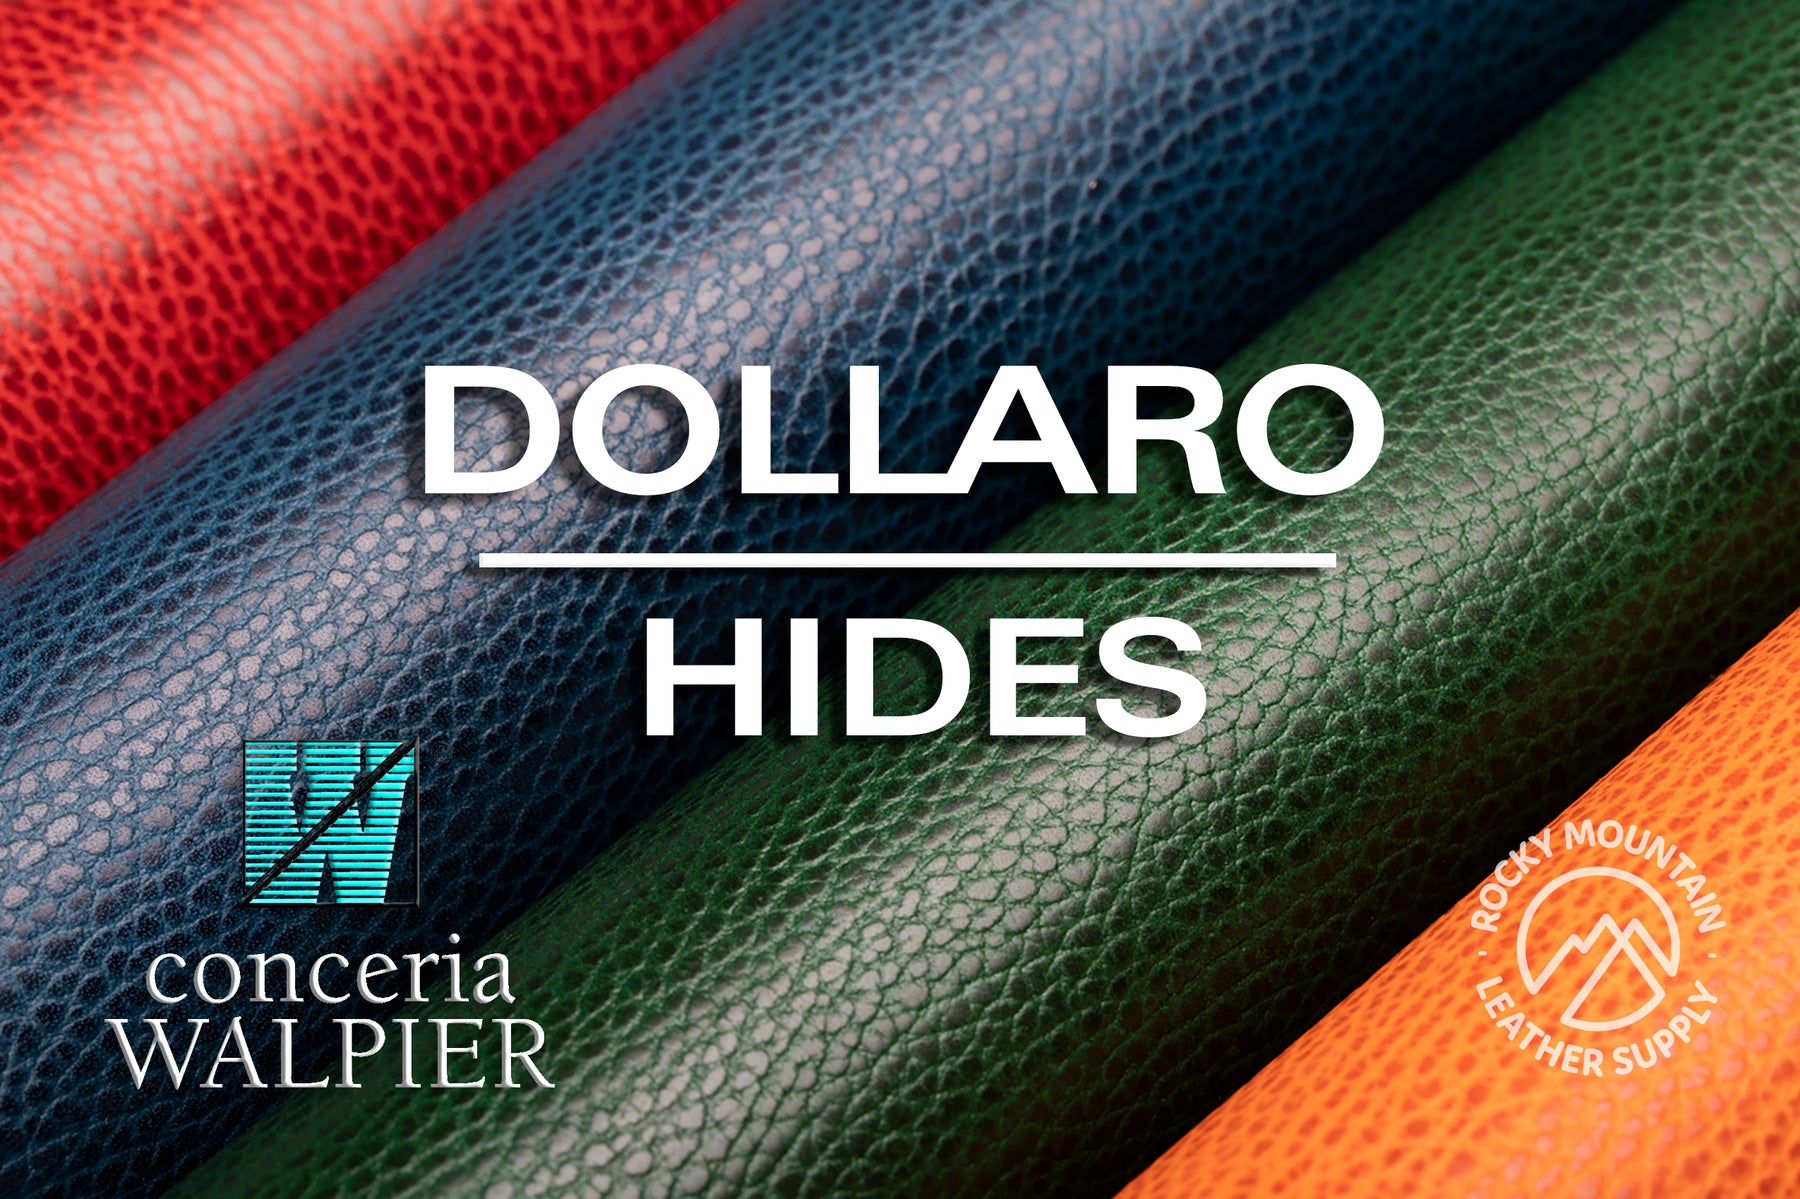 Conceria Walpier 🇮🇹 - Dollaro - Veg Tanned Leather (HIDES)